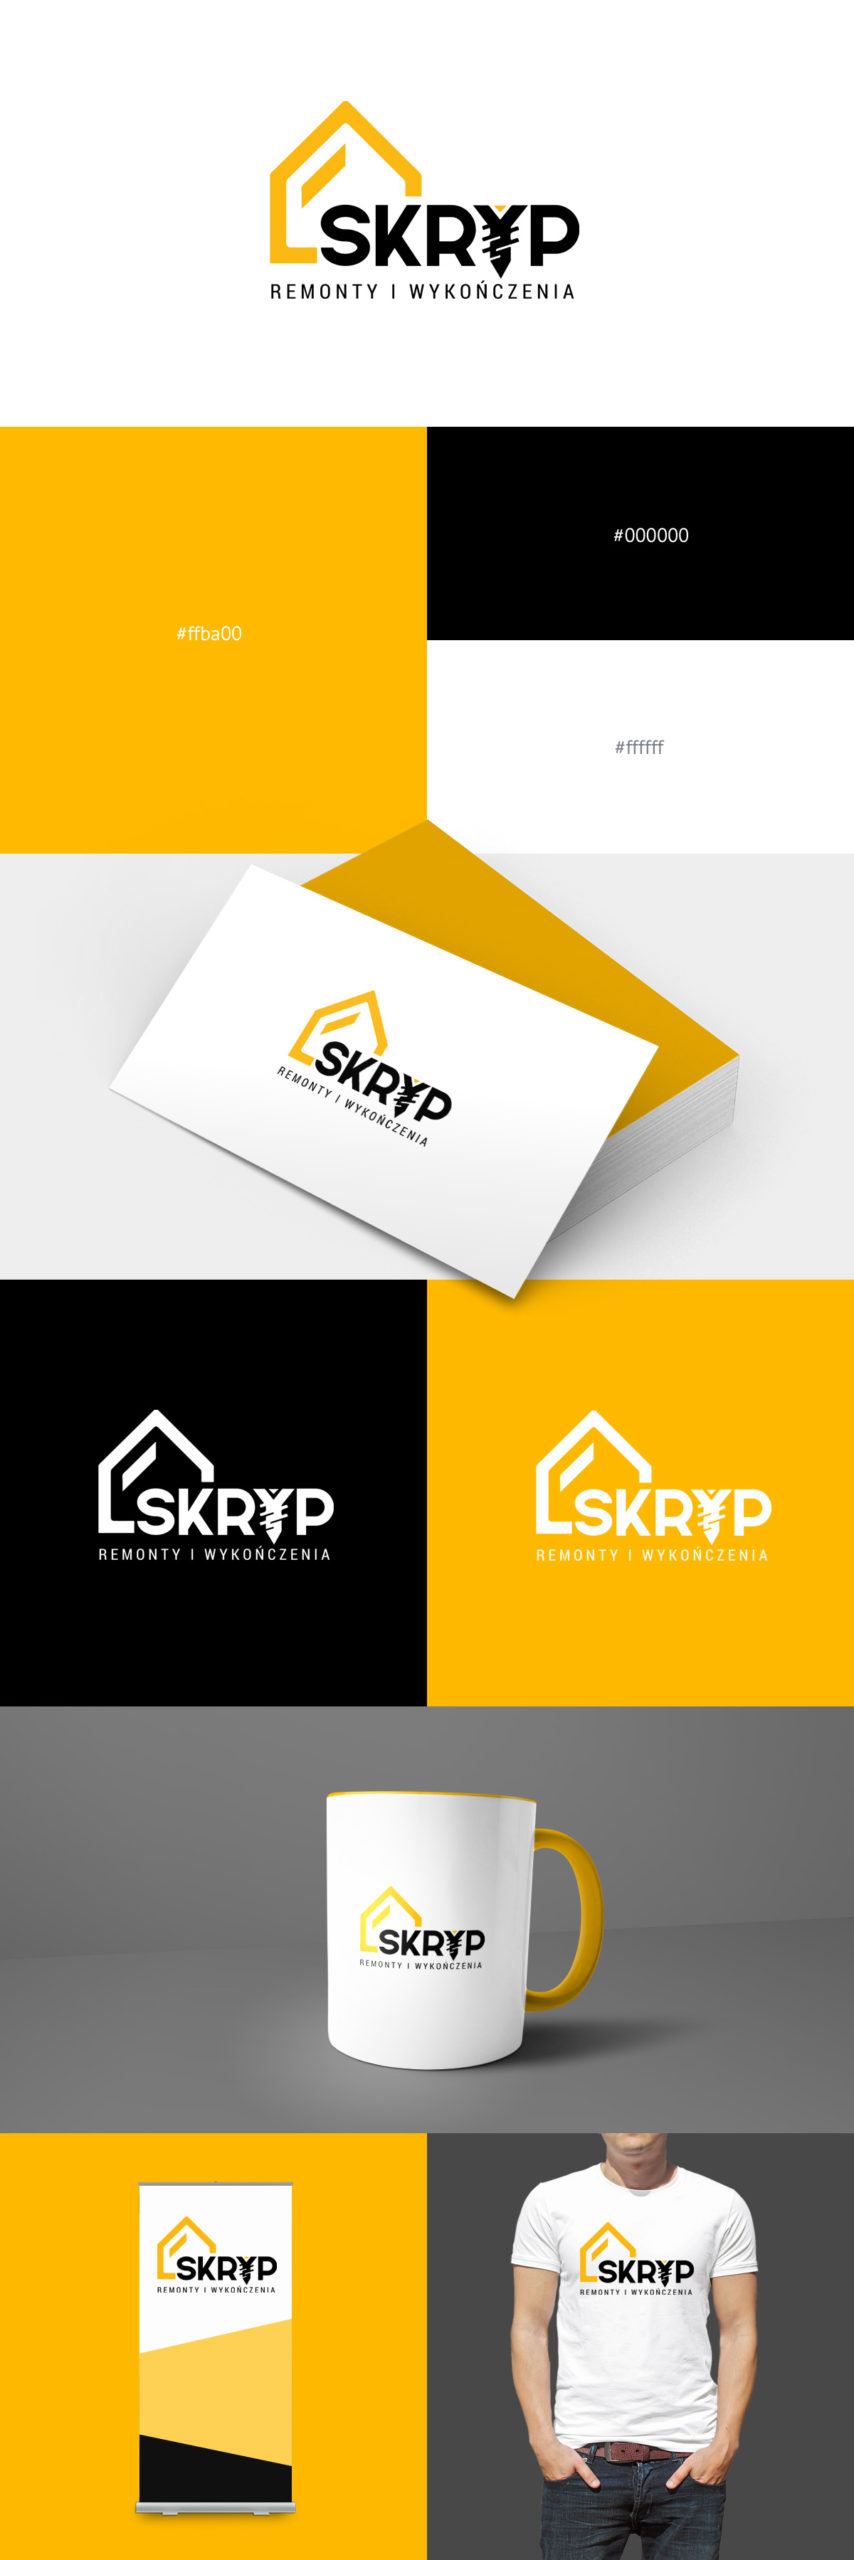 Logo dla firmy budowlanej - SKRYP